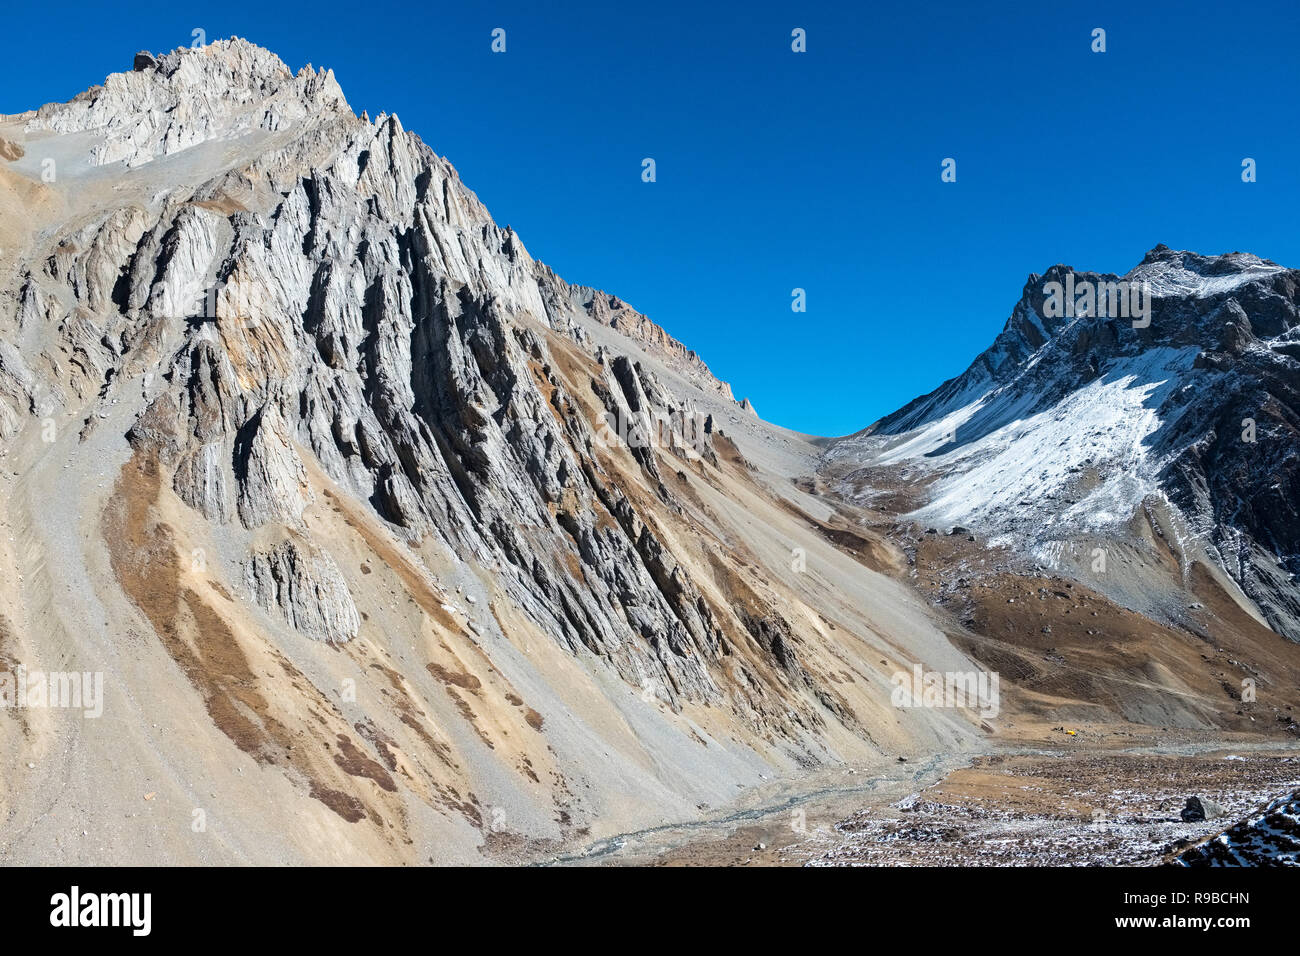 Arid, glaciated mountain terrain on the Tibet / Nepal border of the Himalayas Stock Photo